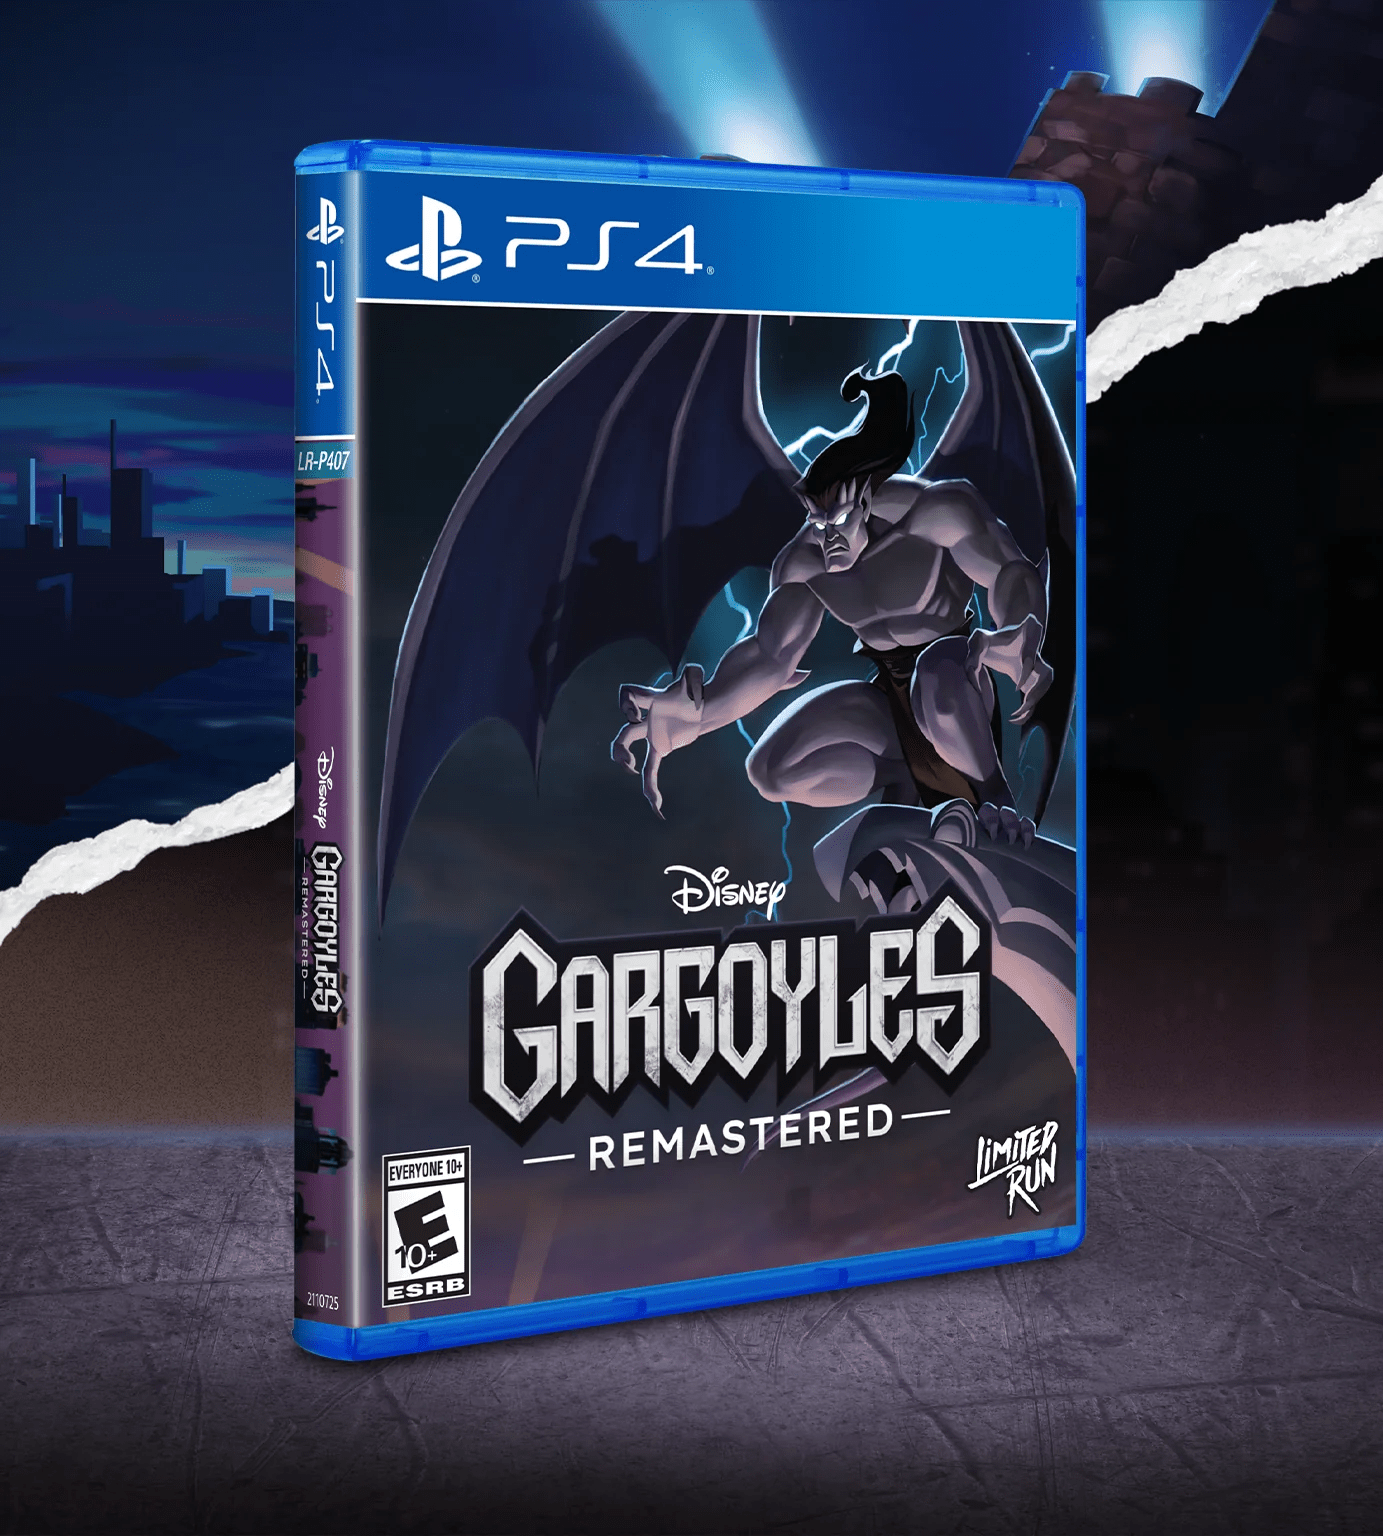 GARGOYLES REMASTERED - LIMITED RUN PS4 Remastered